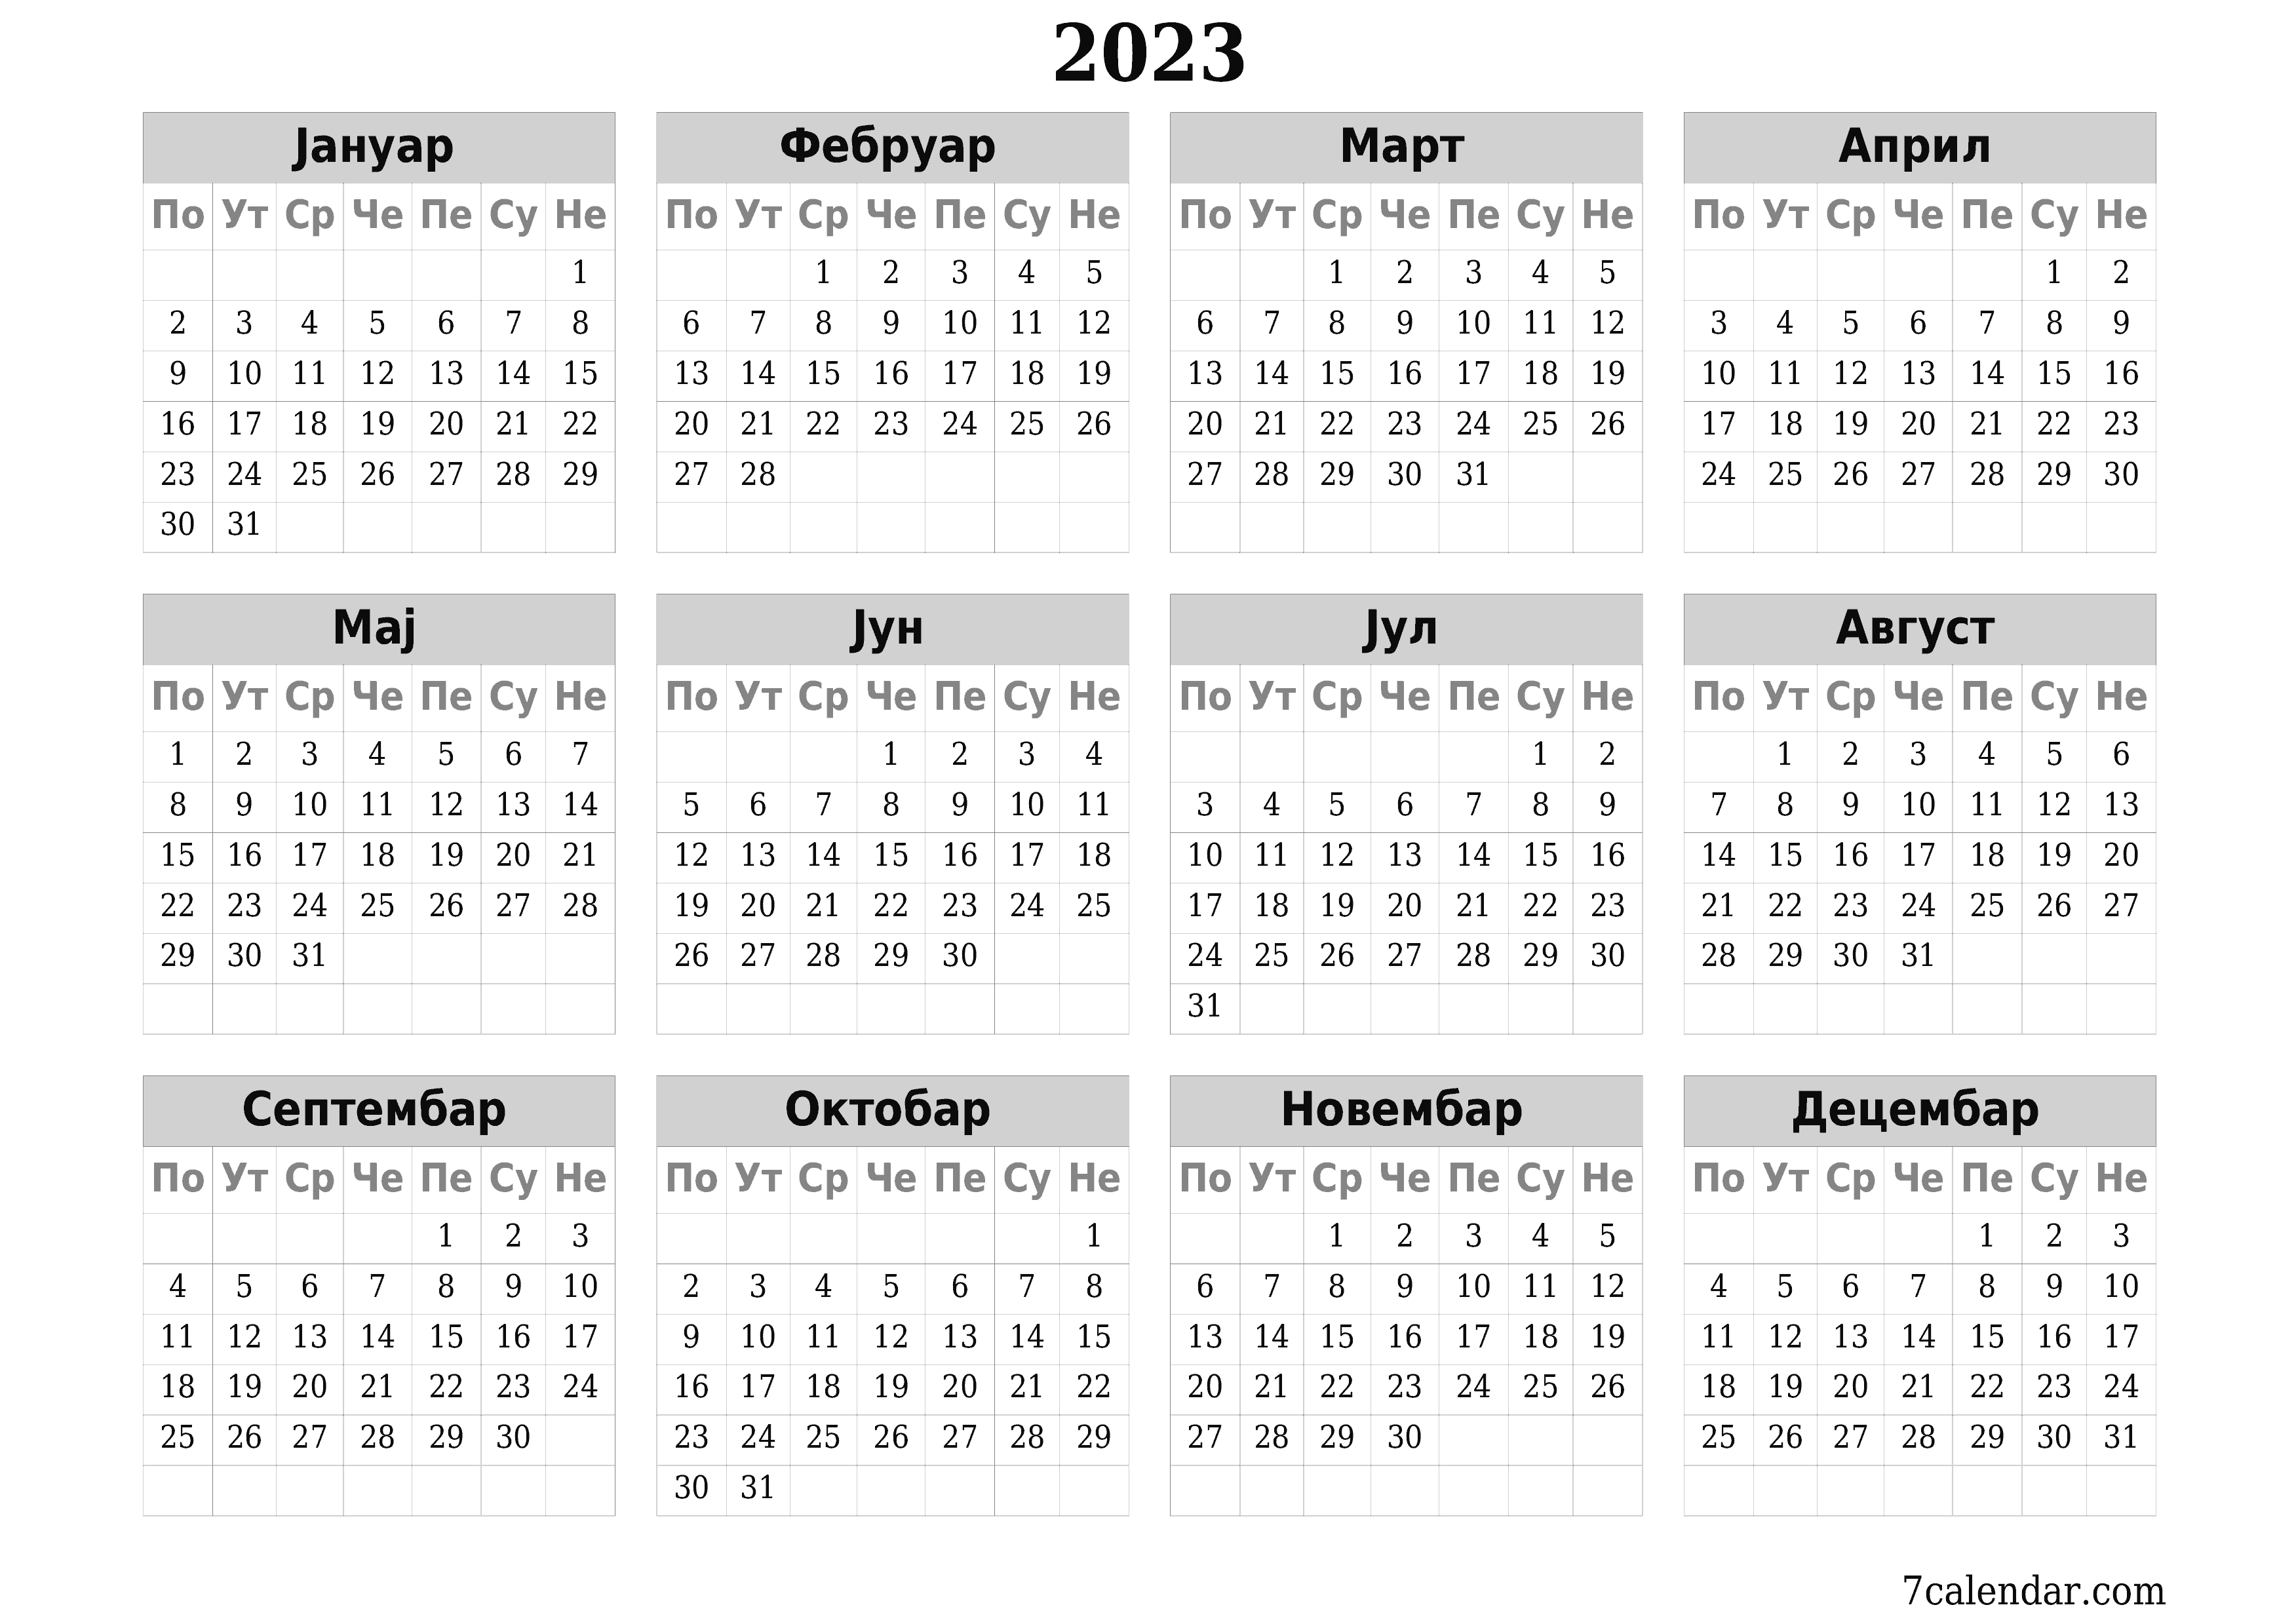  за штампање зидни шаблон а бесплатни хоризонталниј Годишње календар Март (Мар) 2023